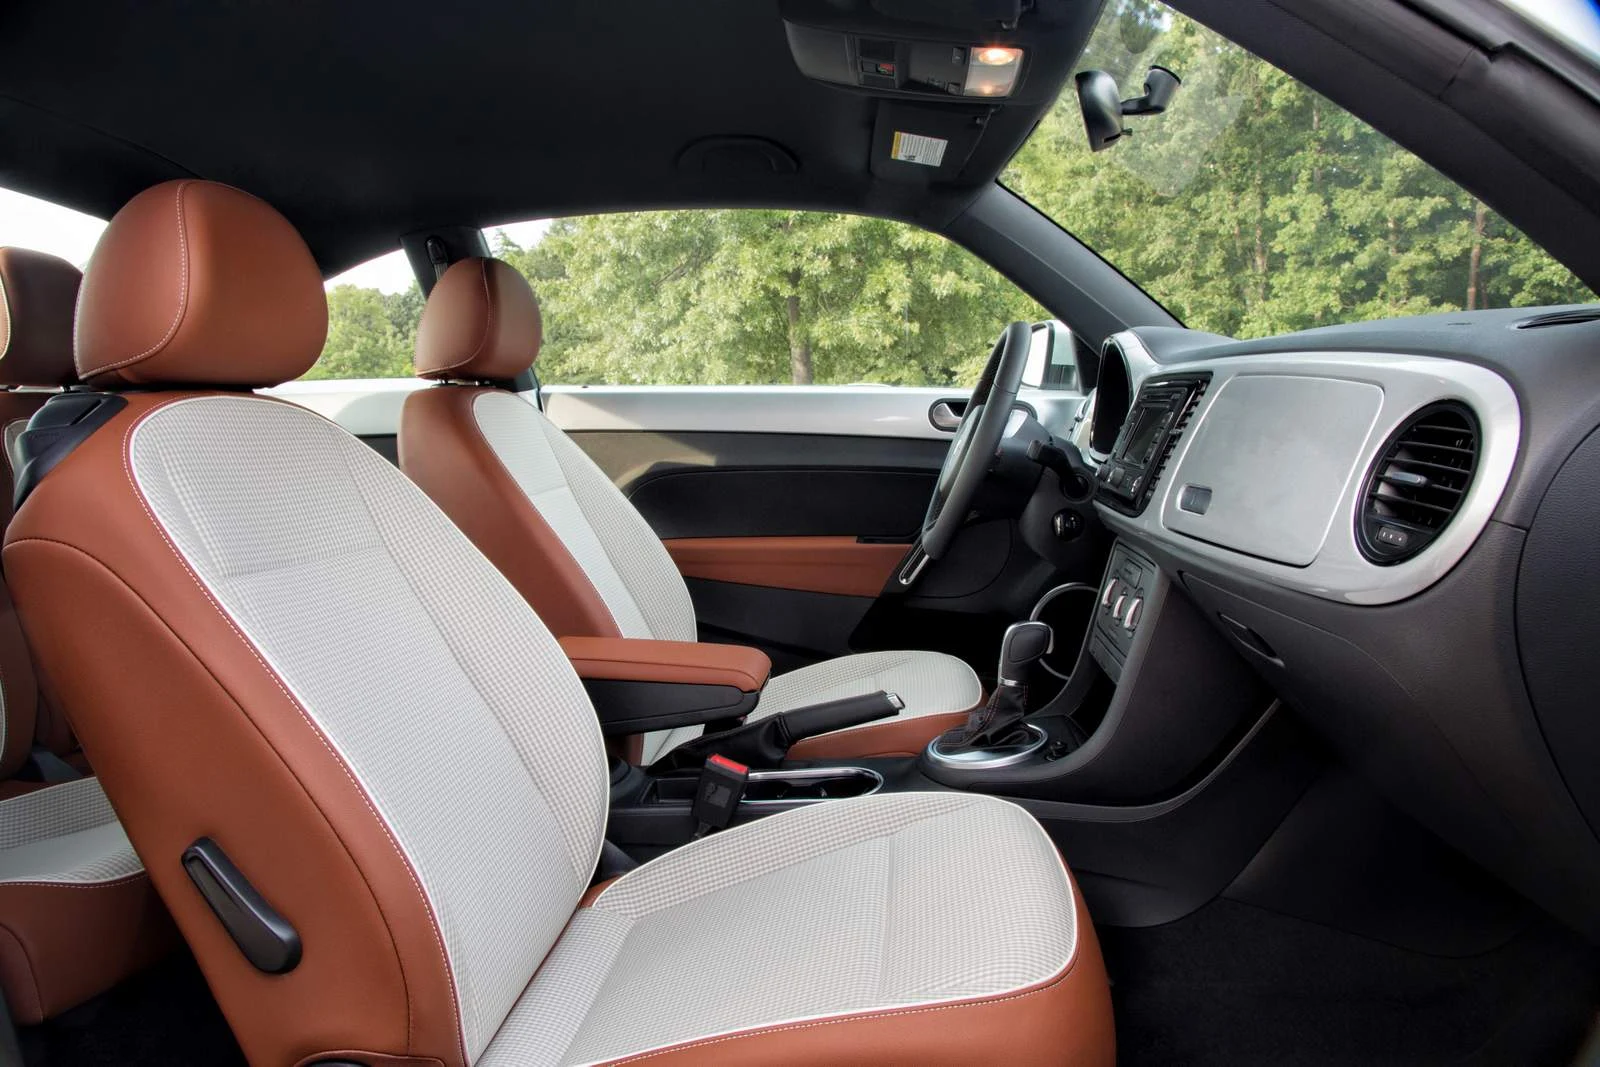 VW Fusca 2015 - interior